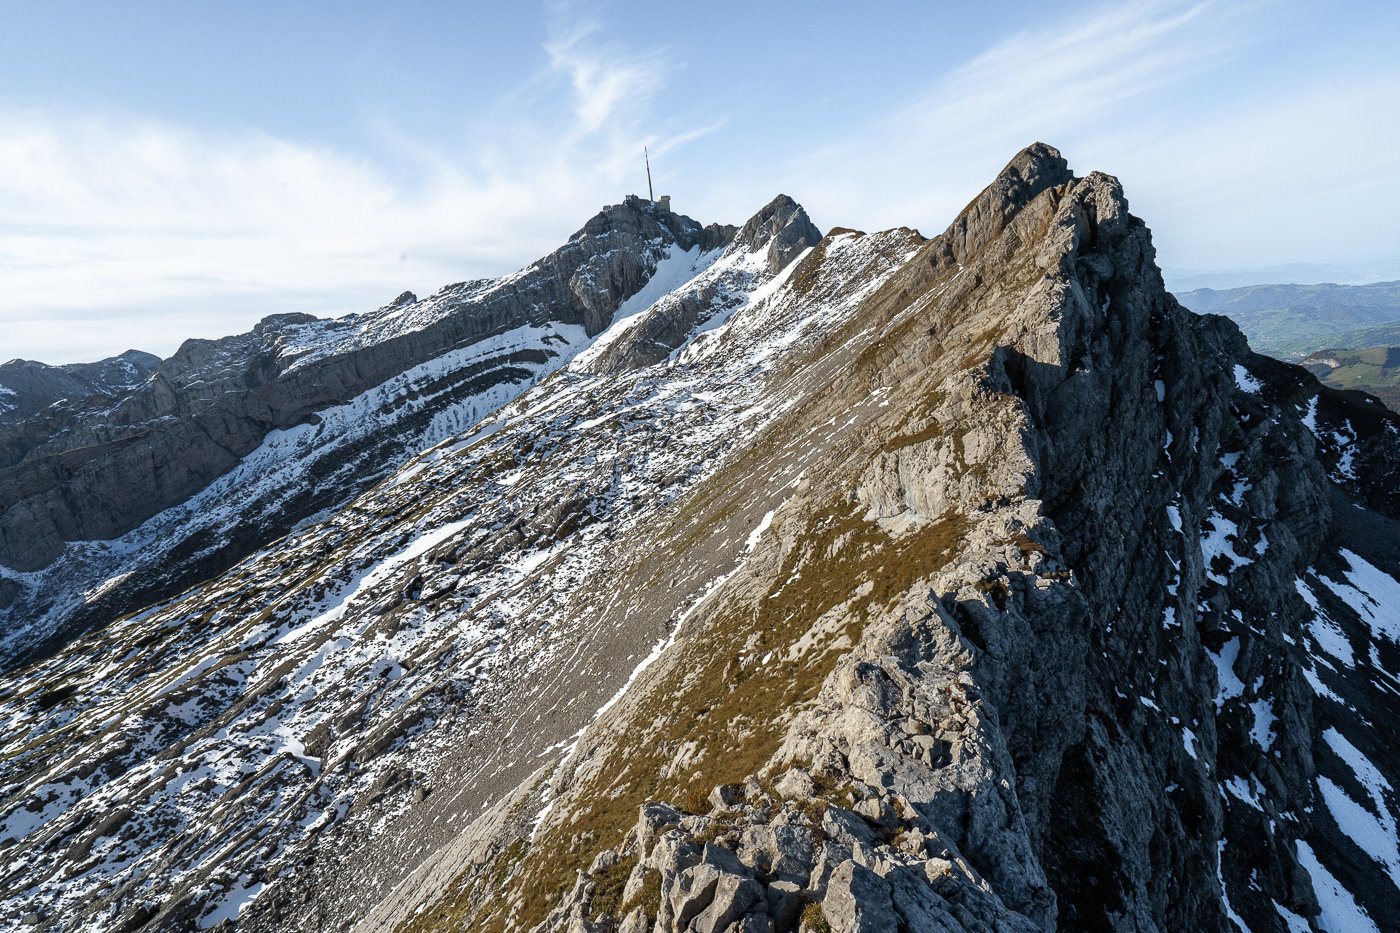 Mount Säntis Hike In Alpstein: The Hiker’s Guide